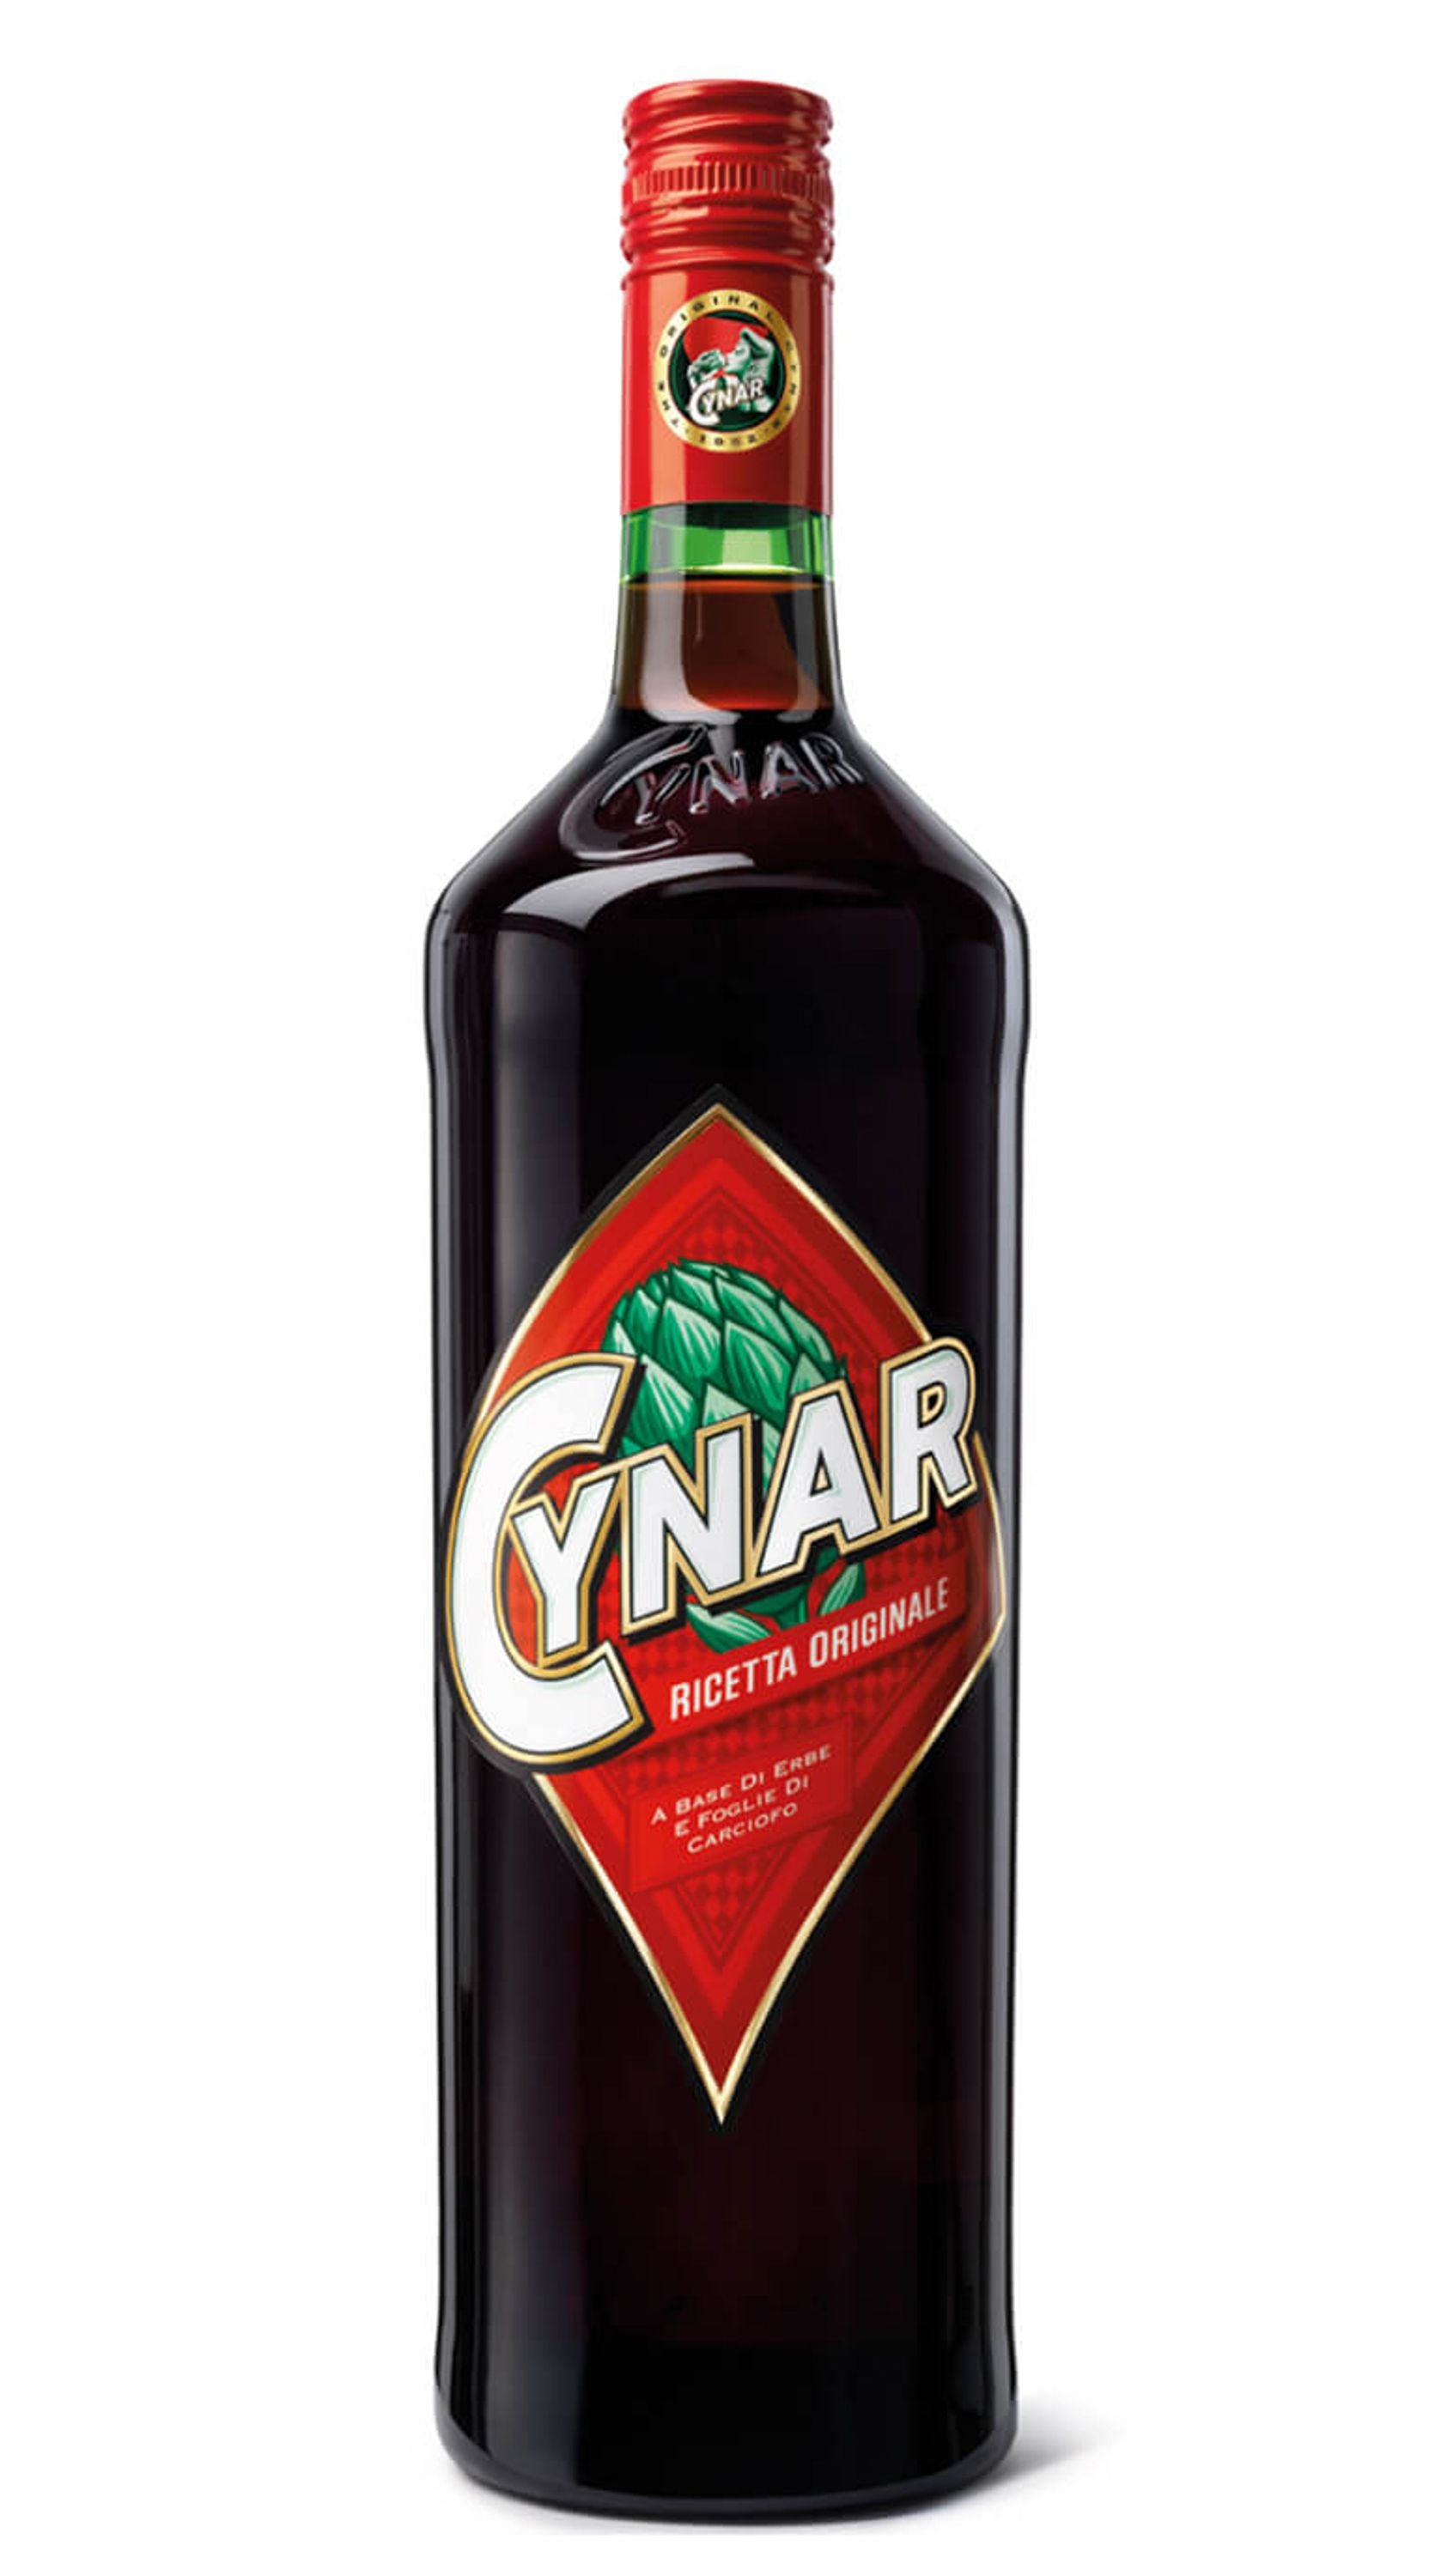 Cynar 0.7l, alc. 16.5% by volume, artichoke herb liqueur Italy 